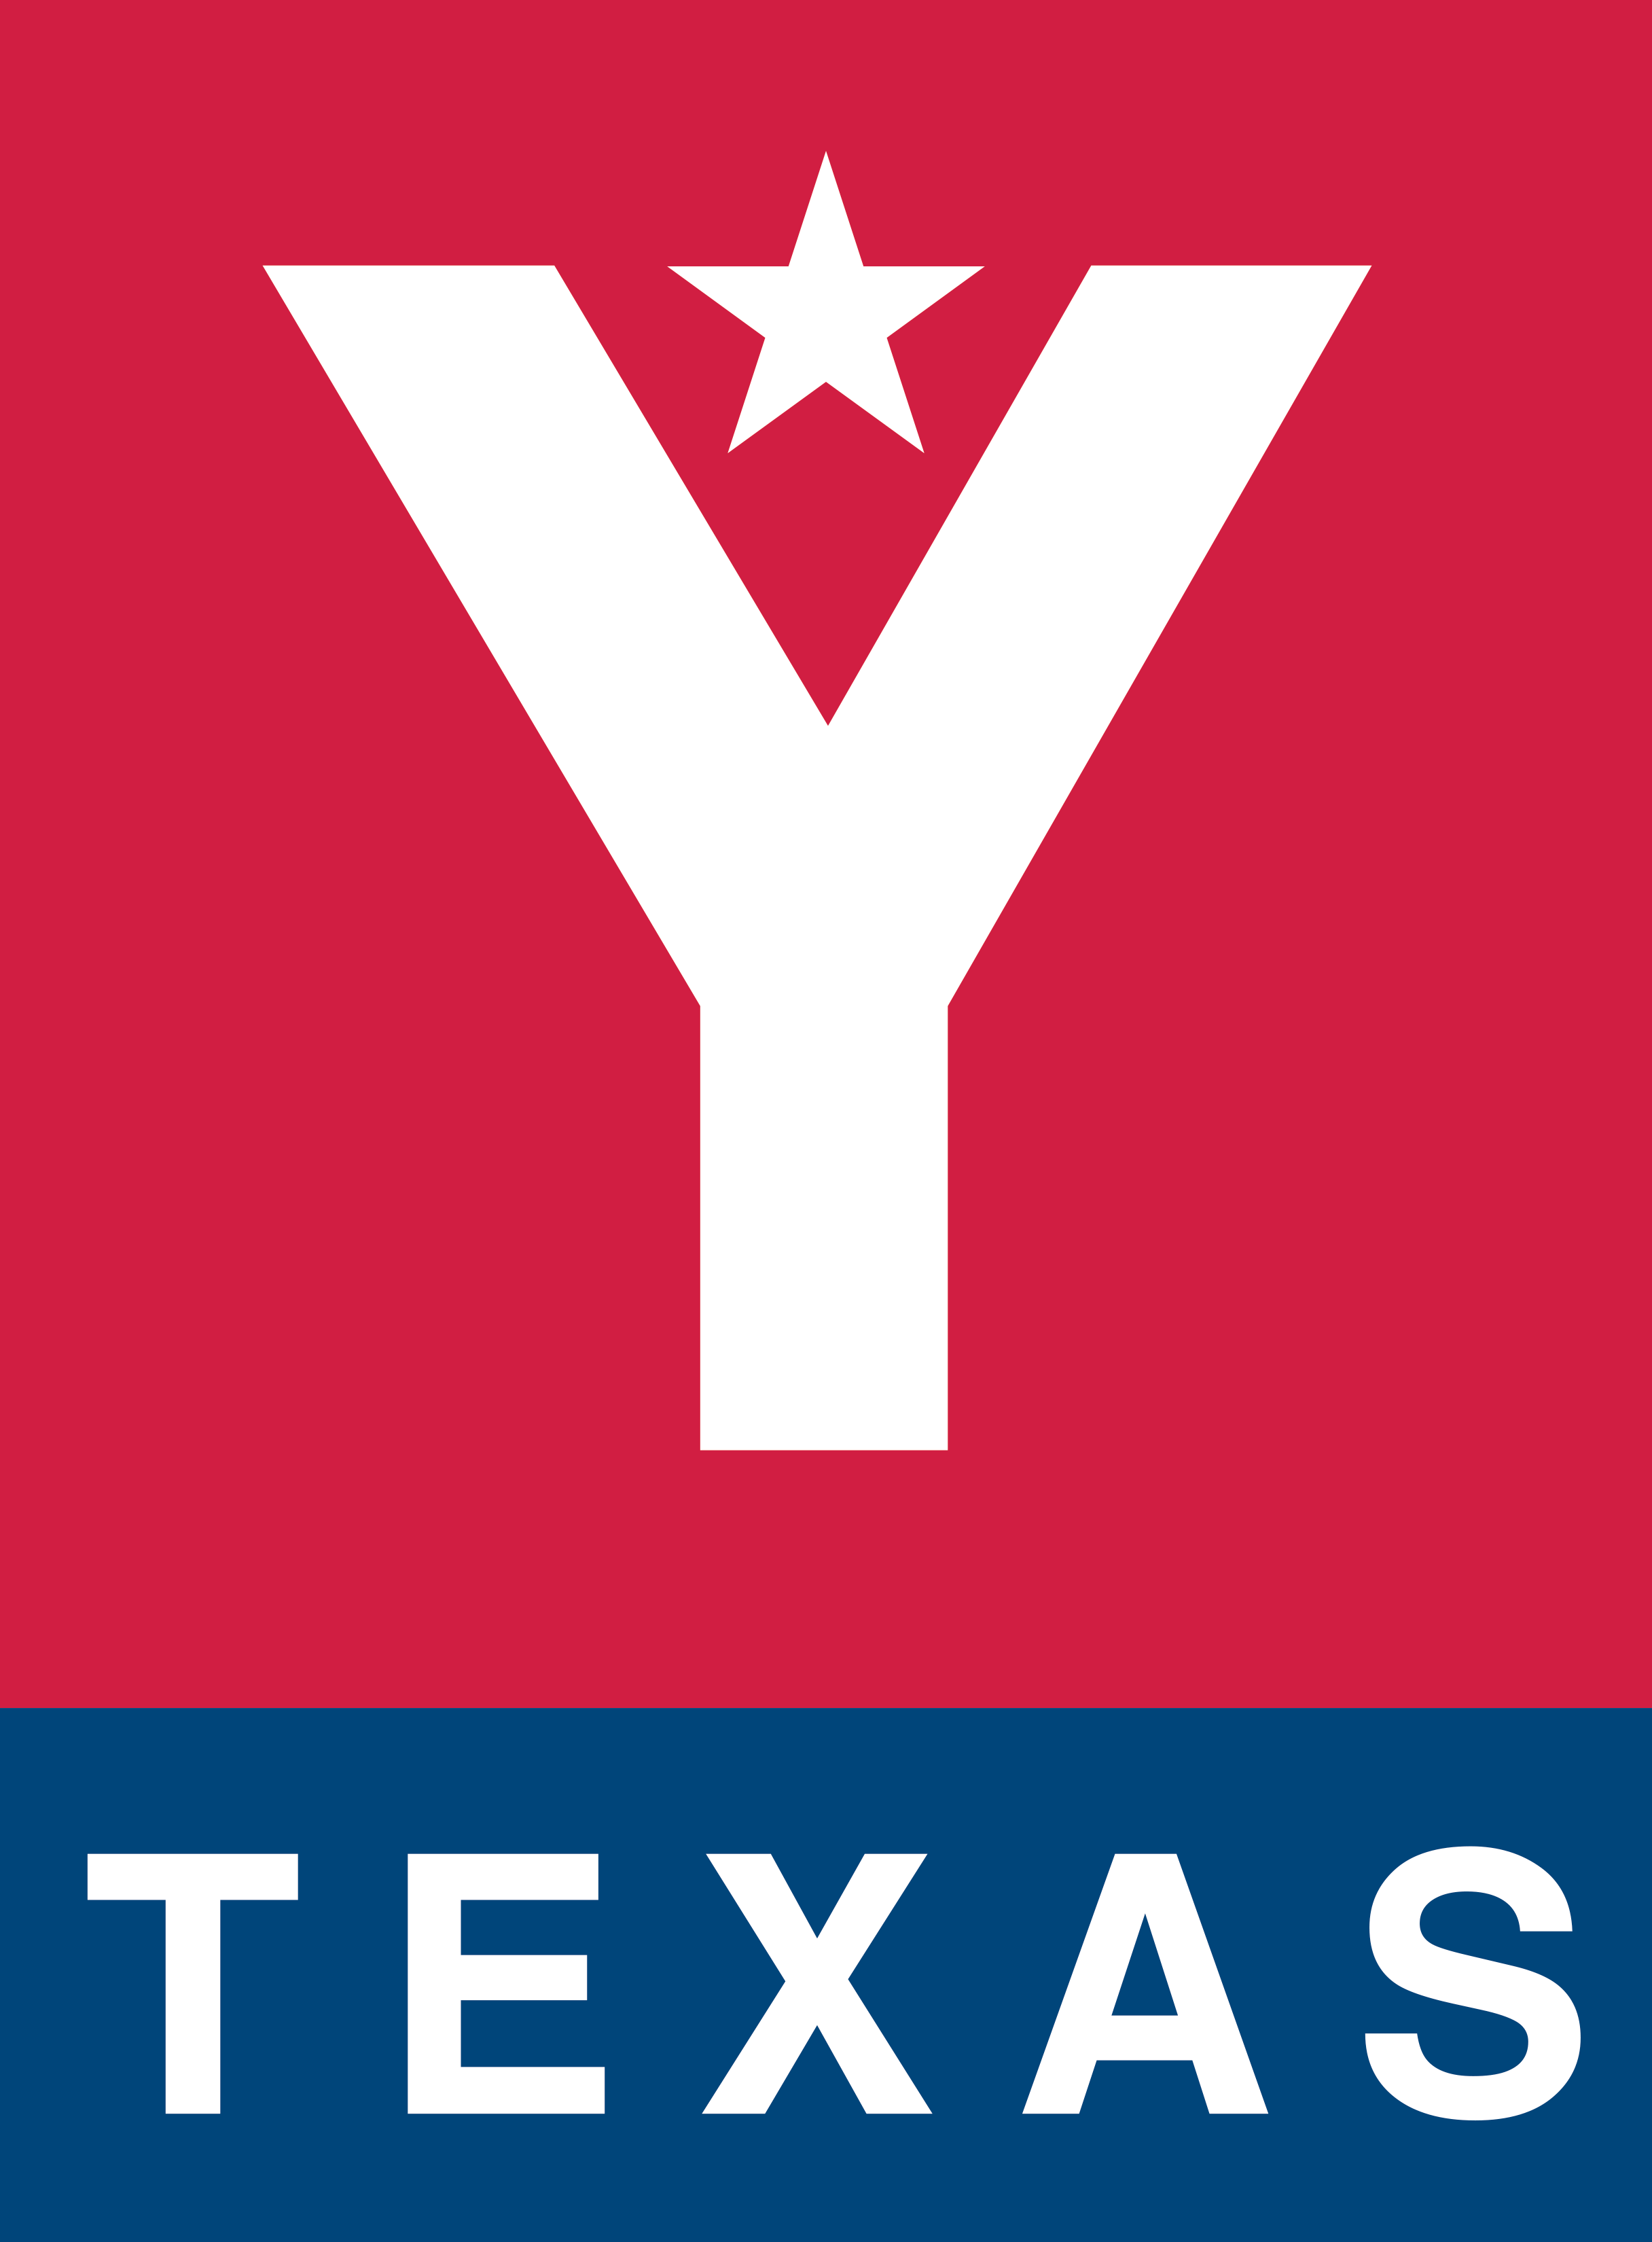 decorative: YTexas logo